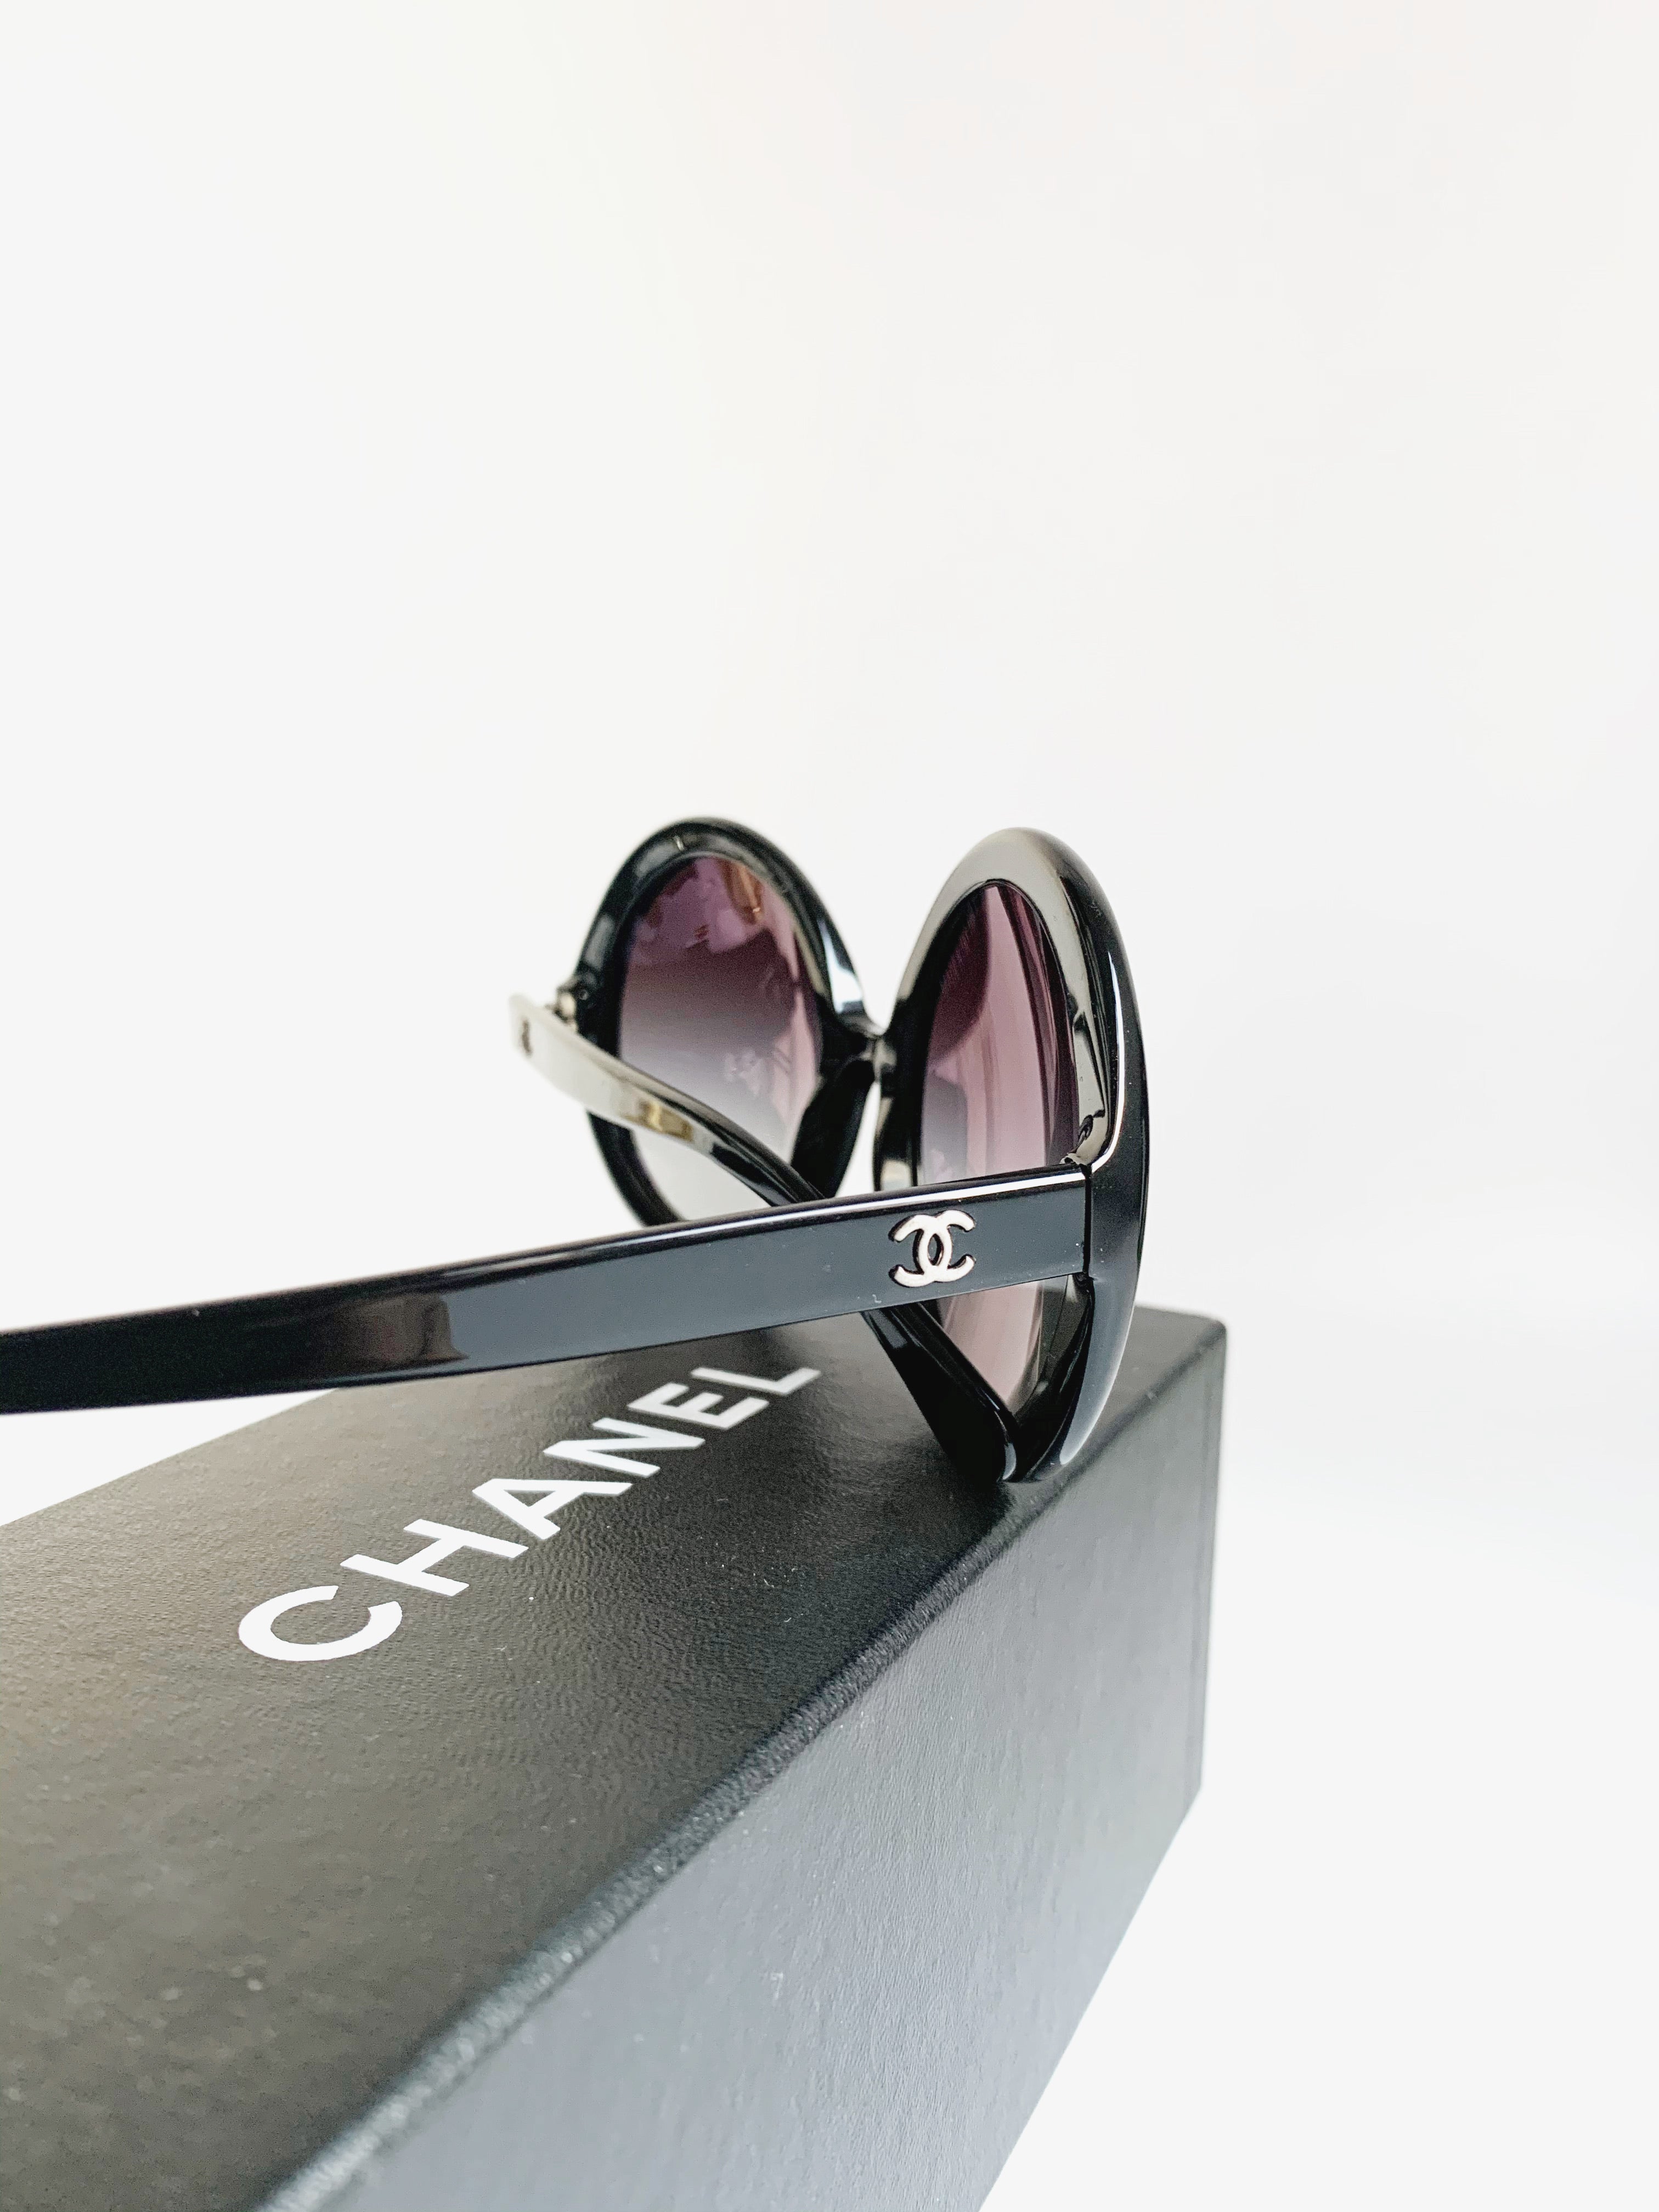 Shop CHANEL Unisex Round Sunglasses by cocofashion